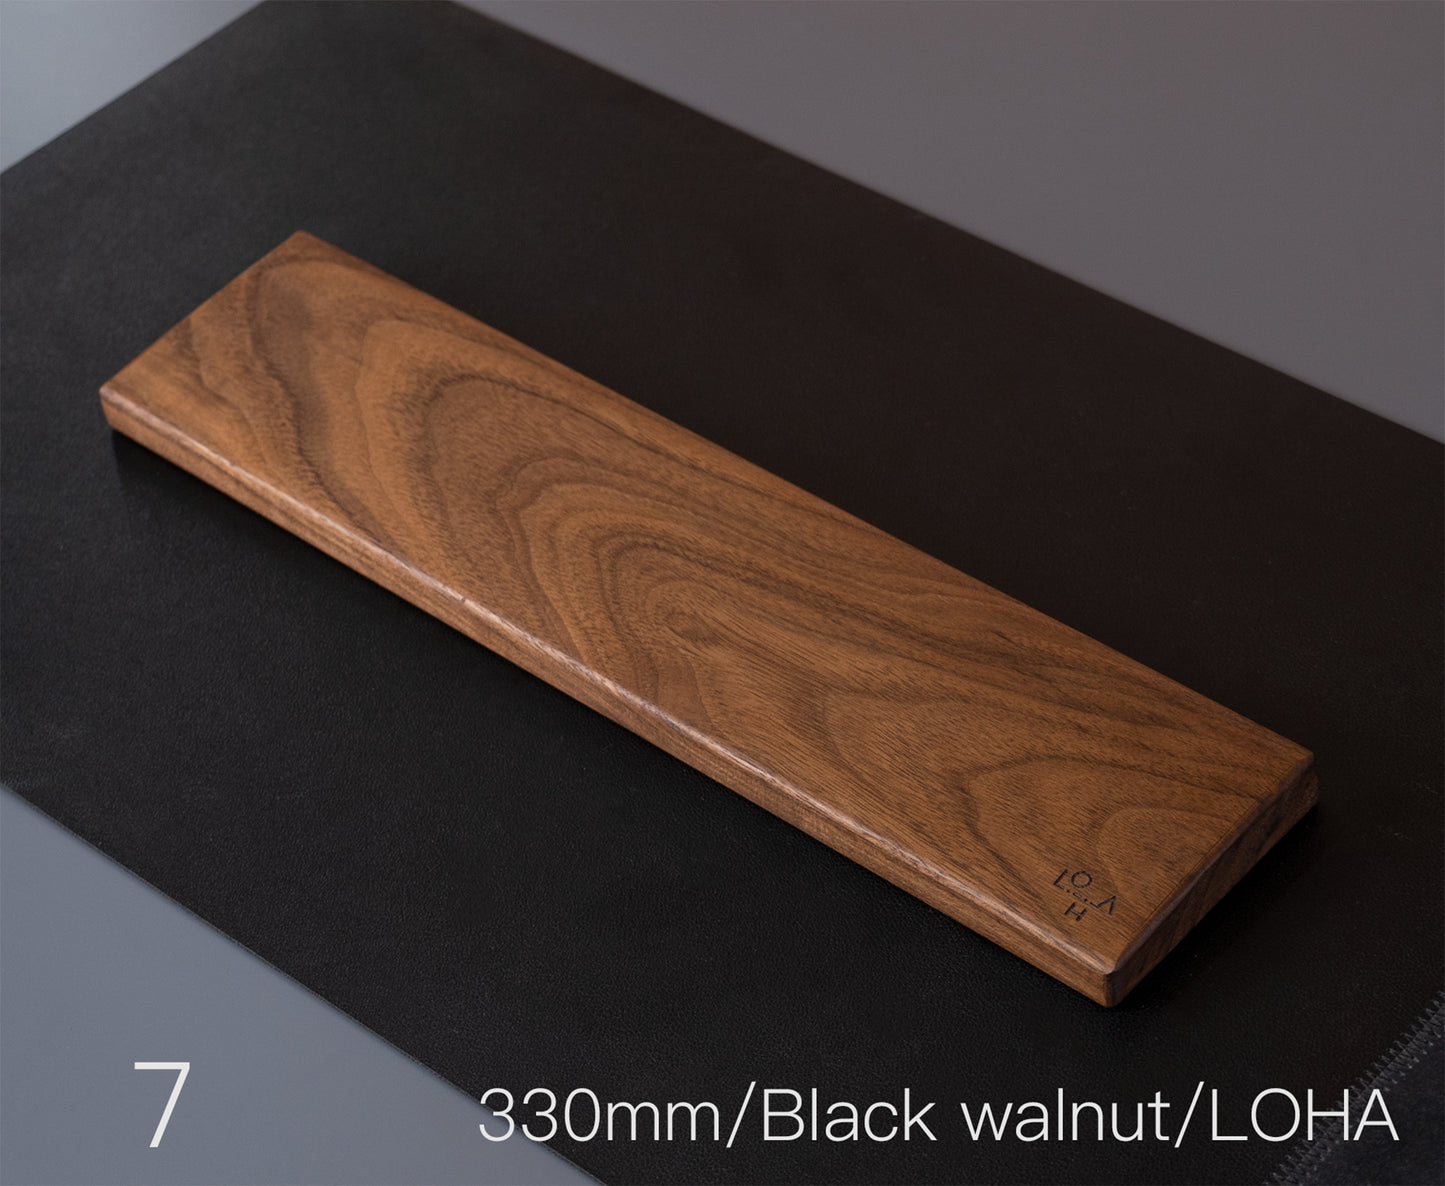 special-edition-walnut-wood-wrist-rest-7